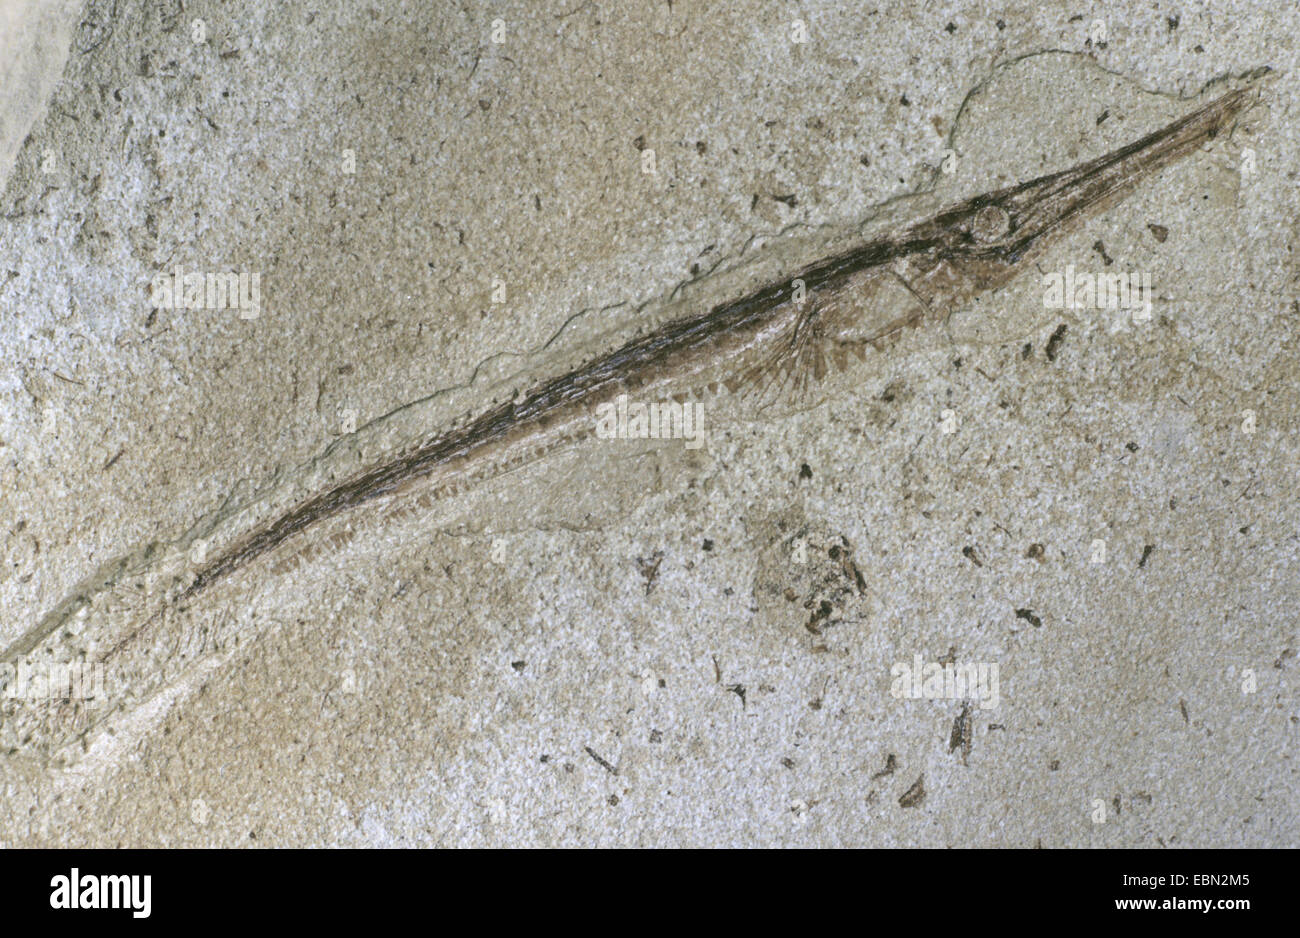 Pipefish (Syngnathidae), fossilised pipefish from Eocene, Denmark, Juetland Stock Photo